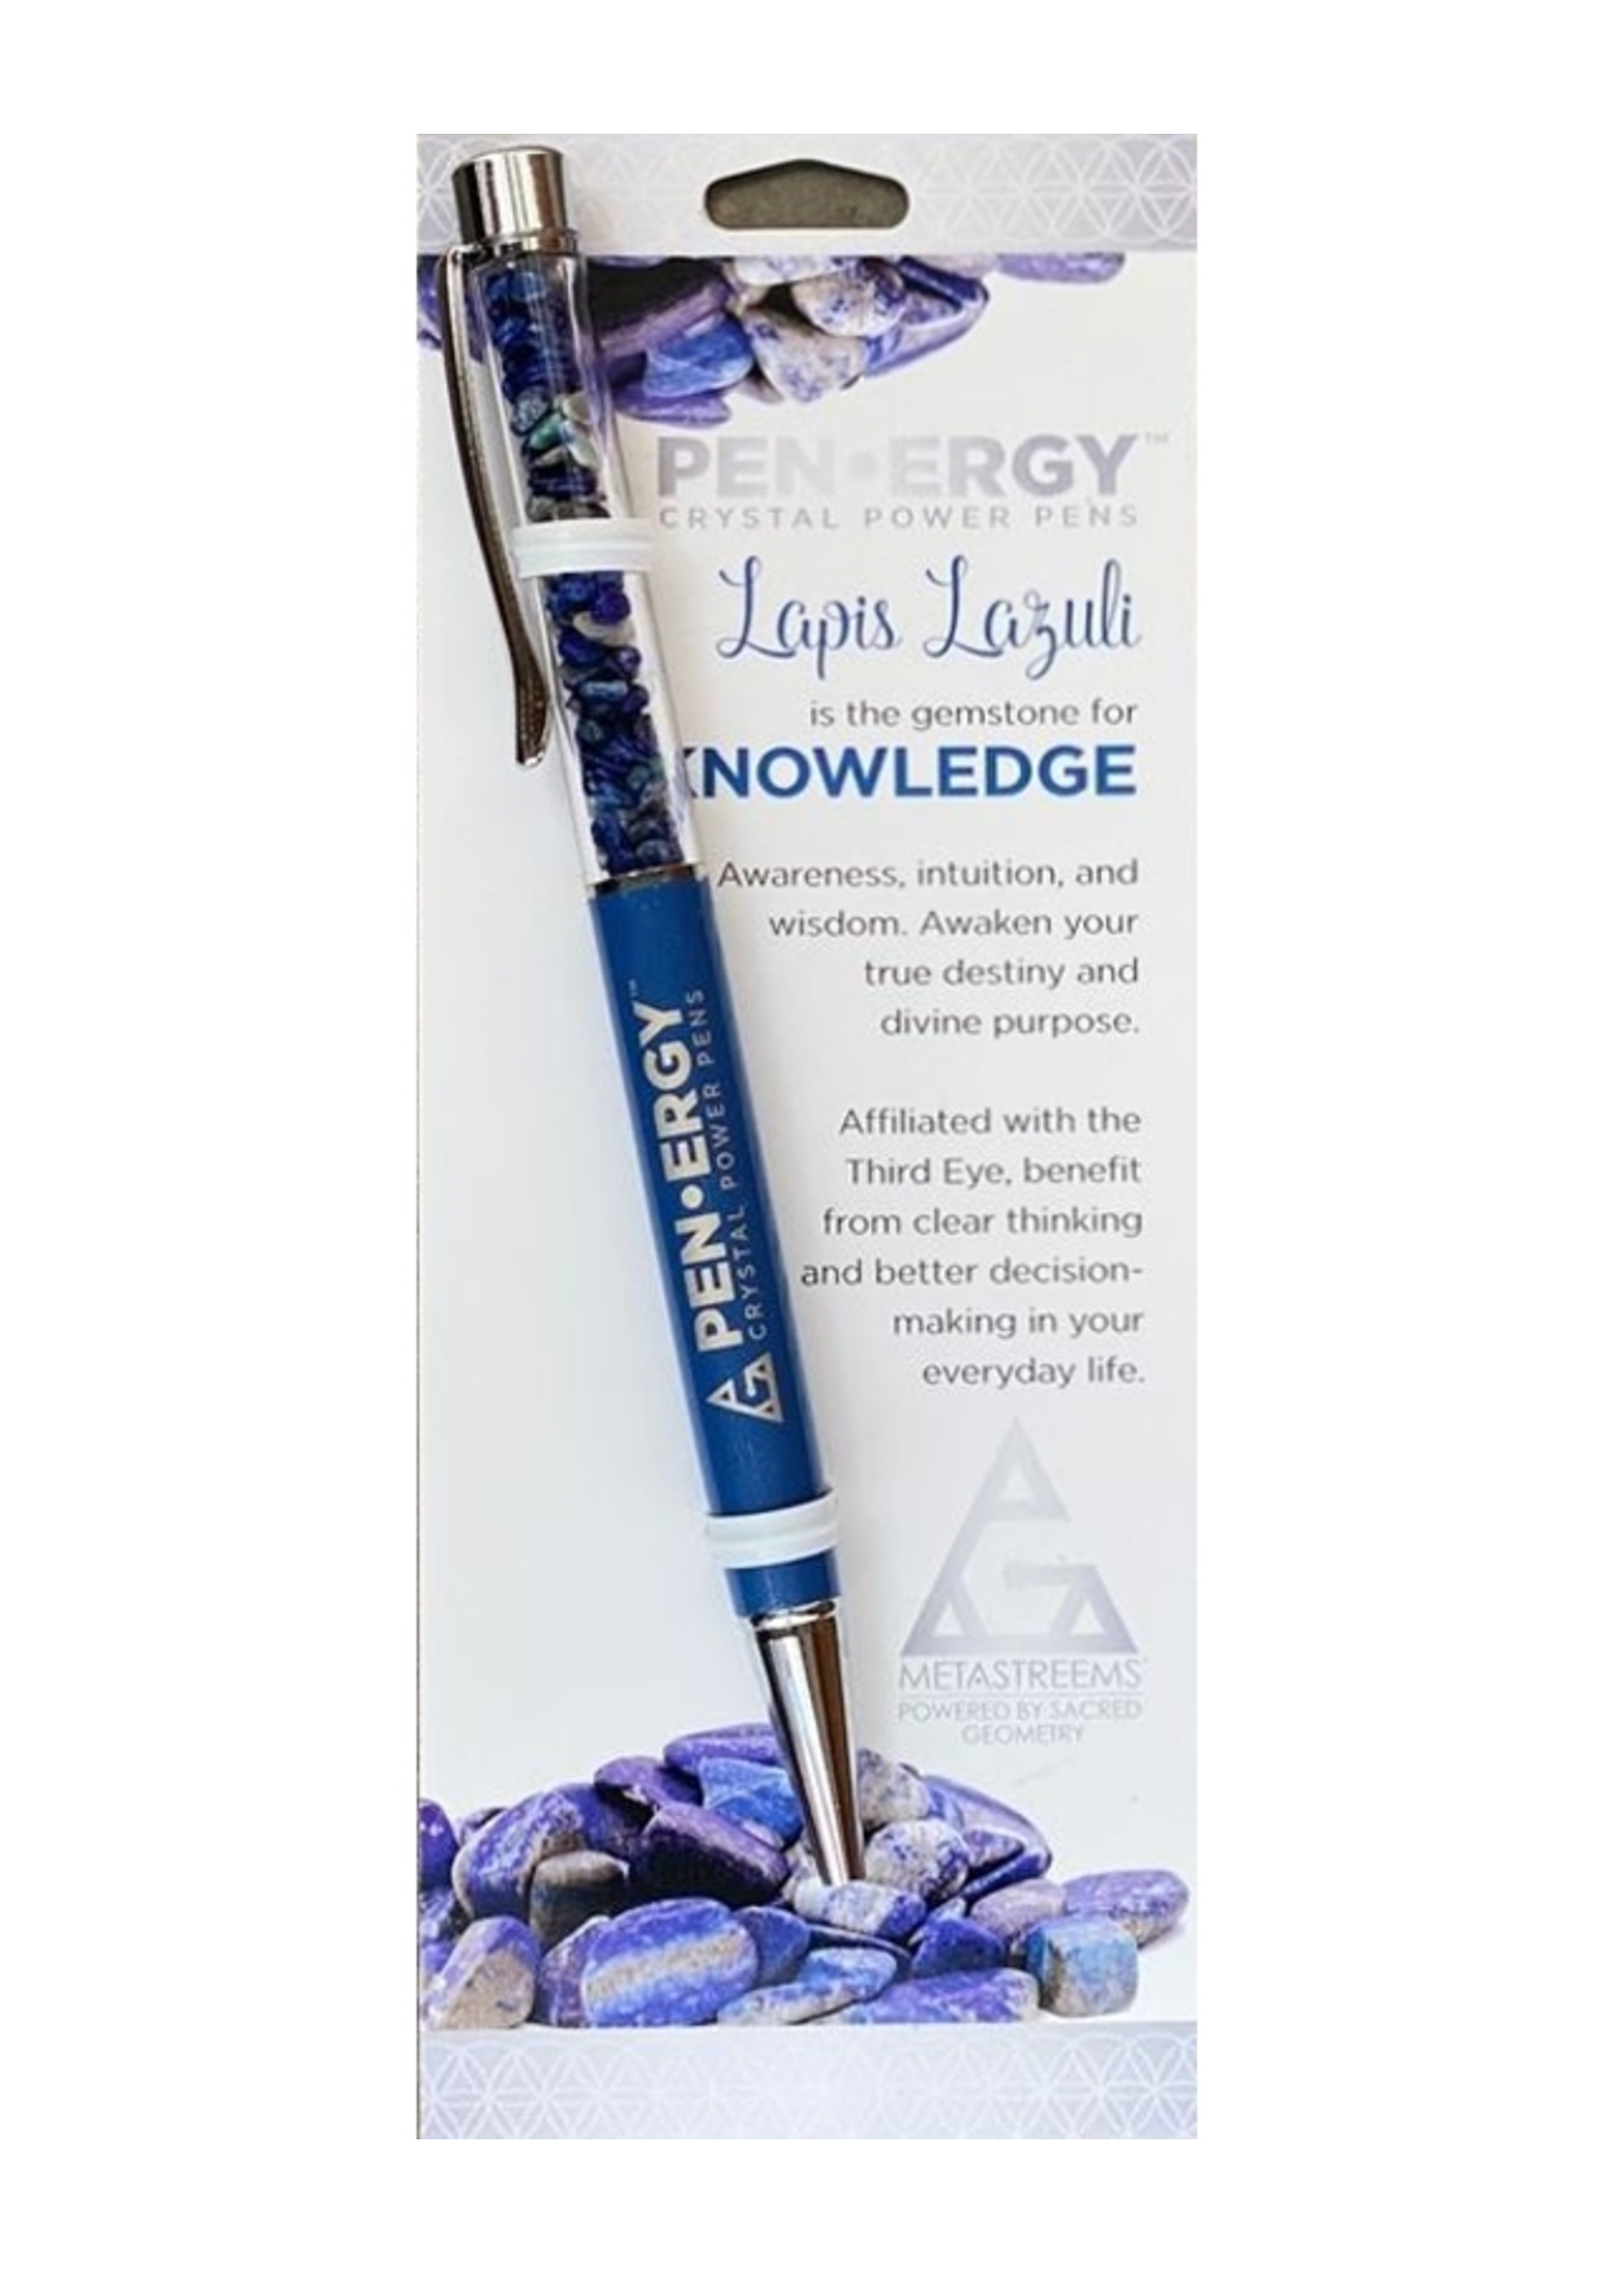 PEN - ERGY Crystal Power Pens